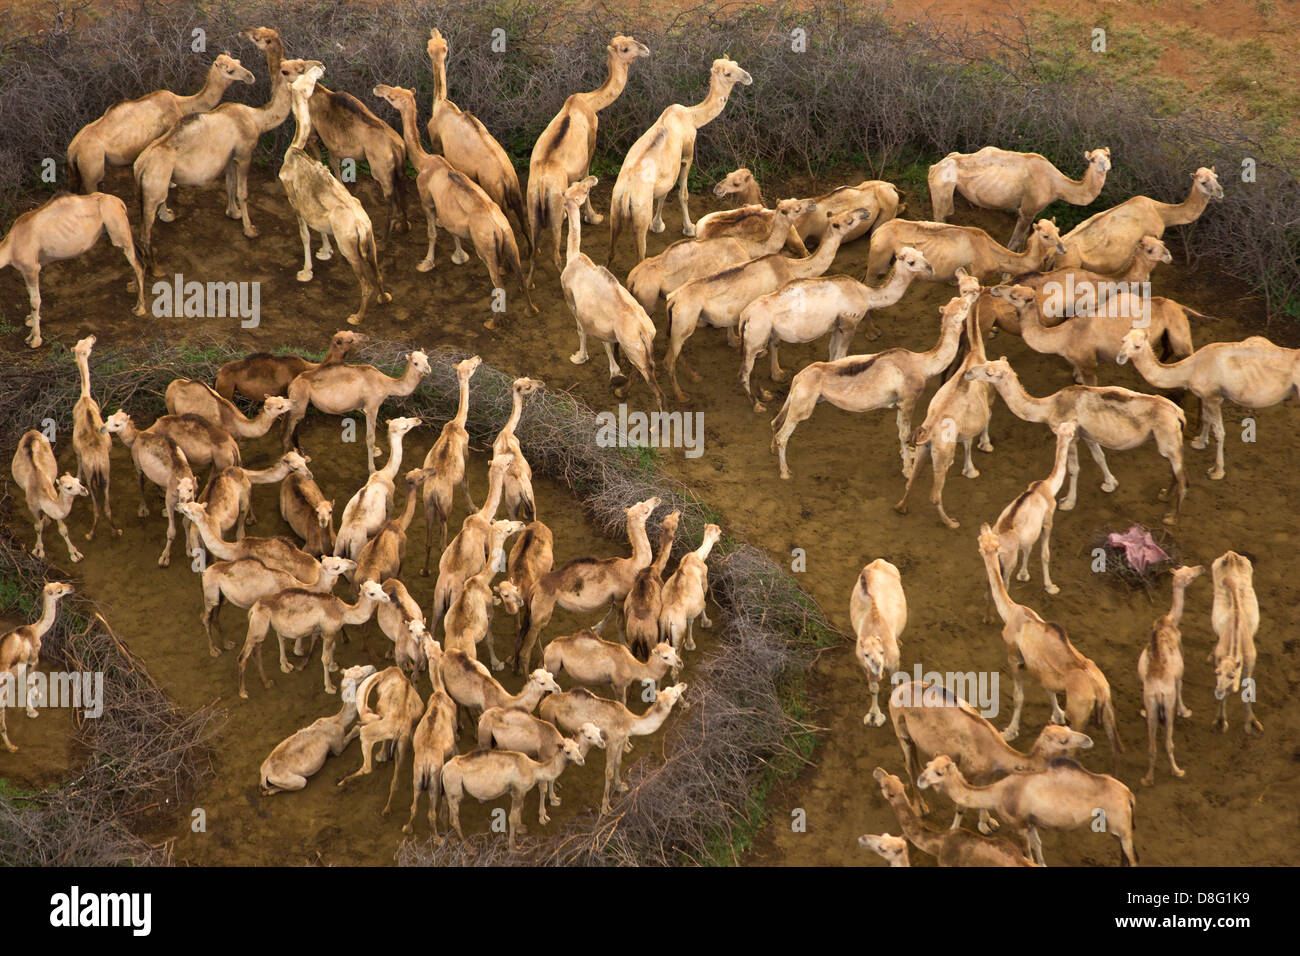 Aerial view of Camels(Camelus dromedarius) in their pens. Northern Kenya Stock Photo